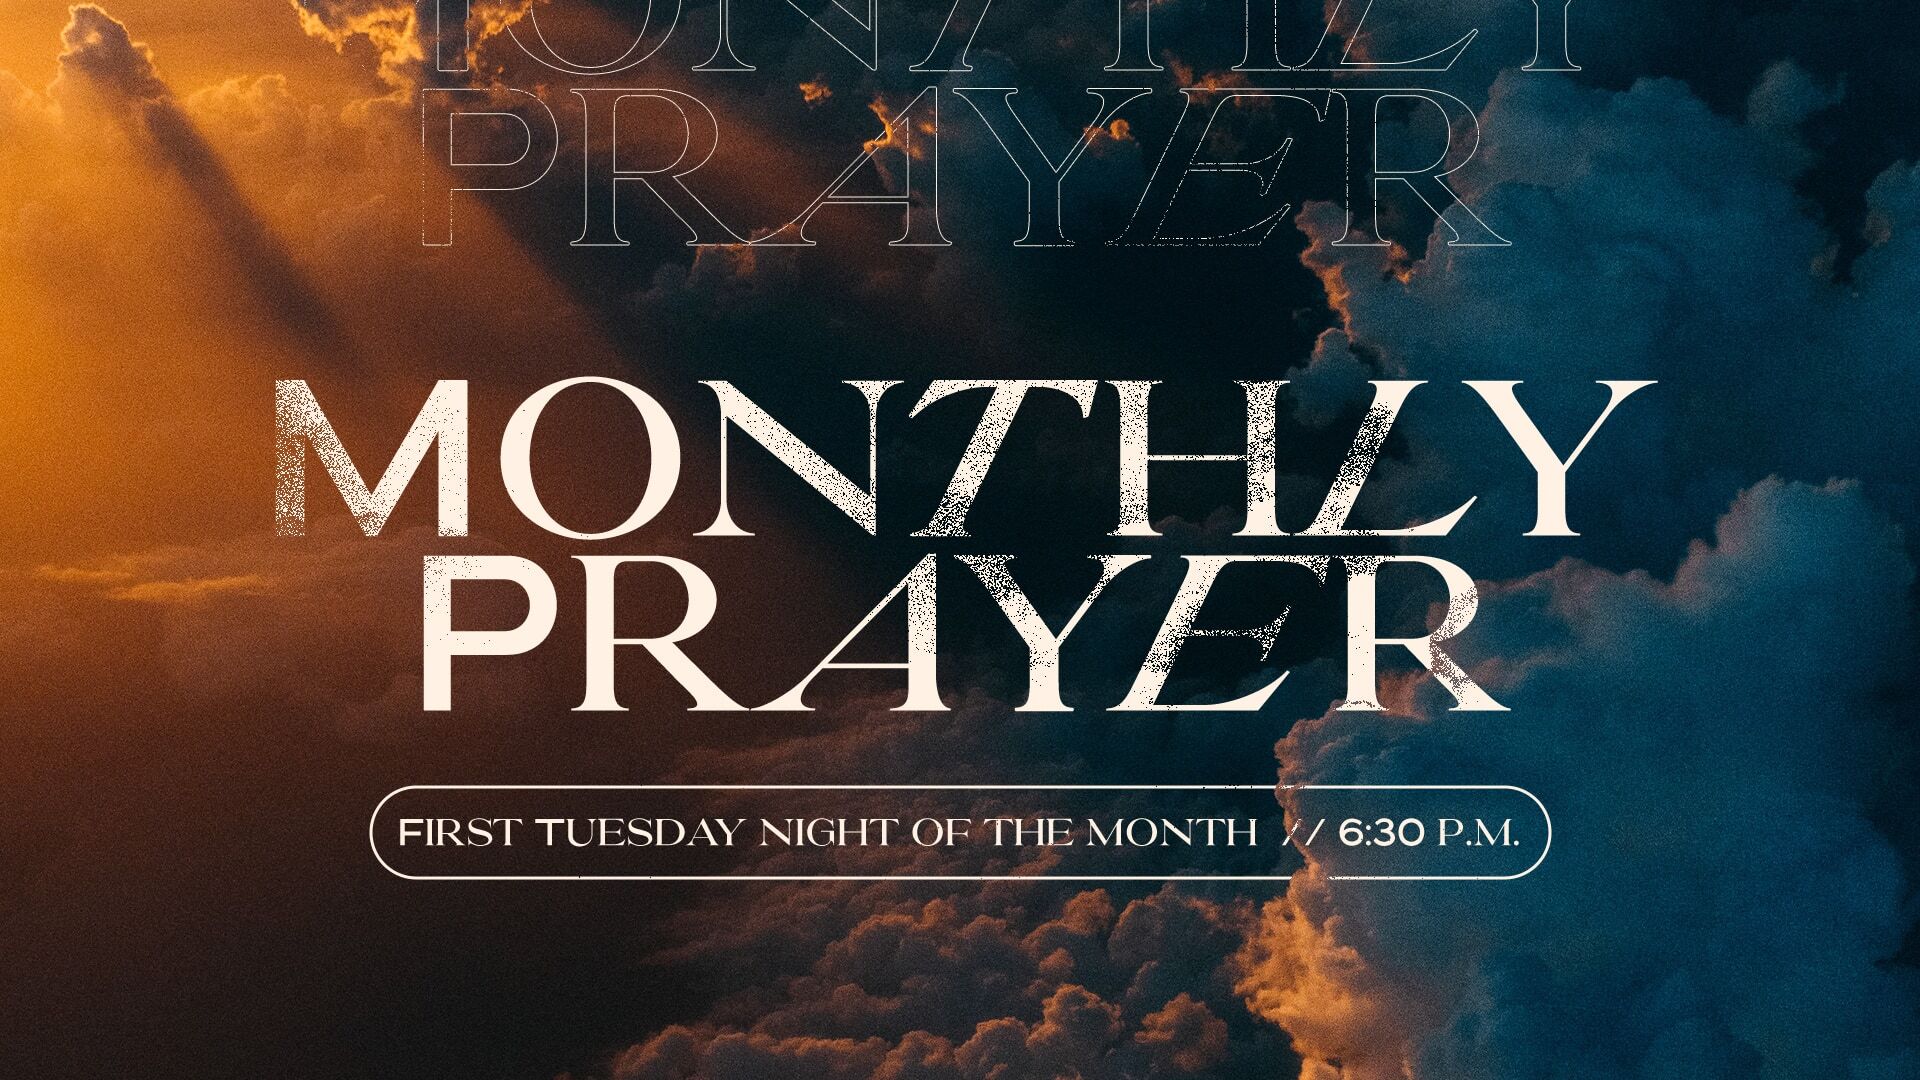 Prayer Night